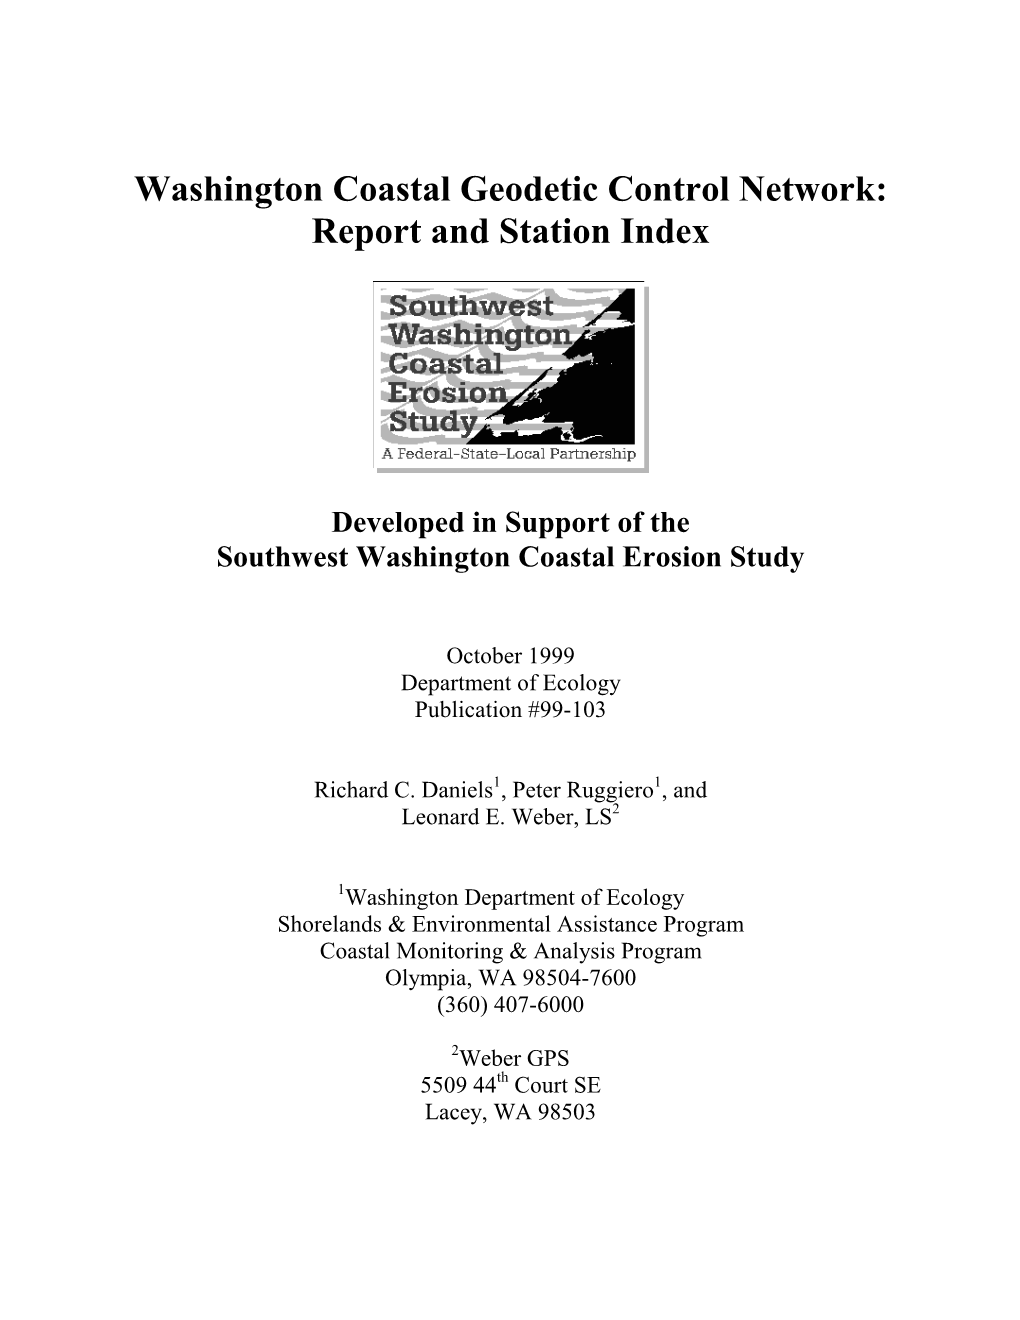 Washington Coastal Geodetic Control Network: Report and Station Index